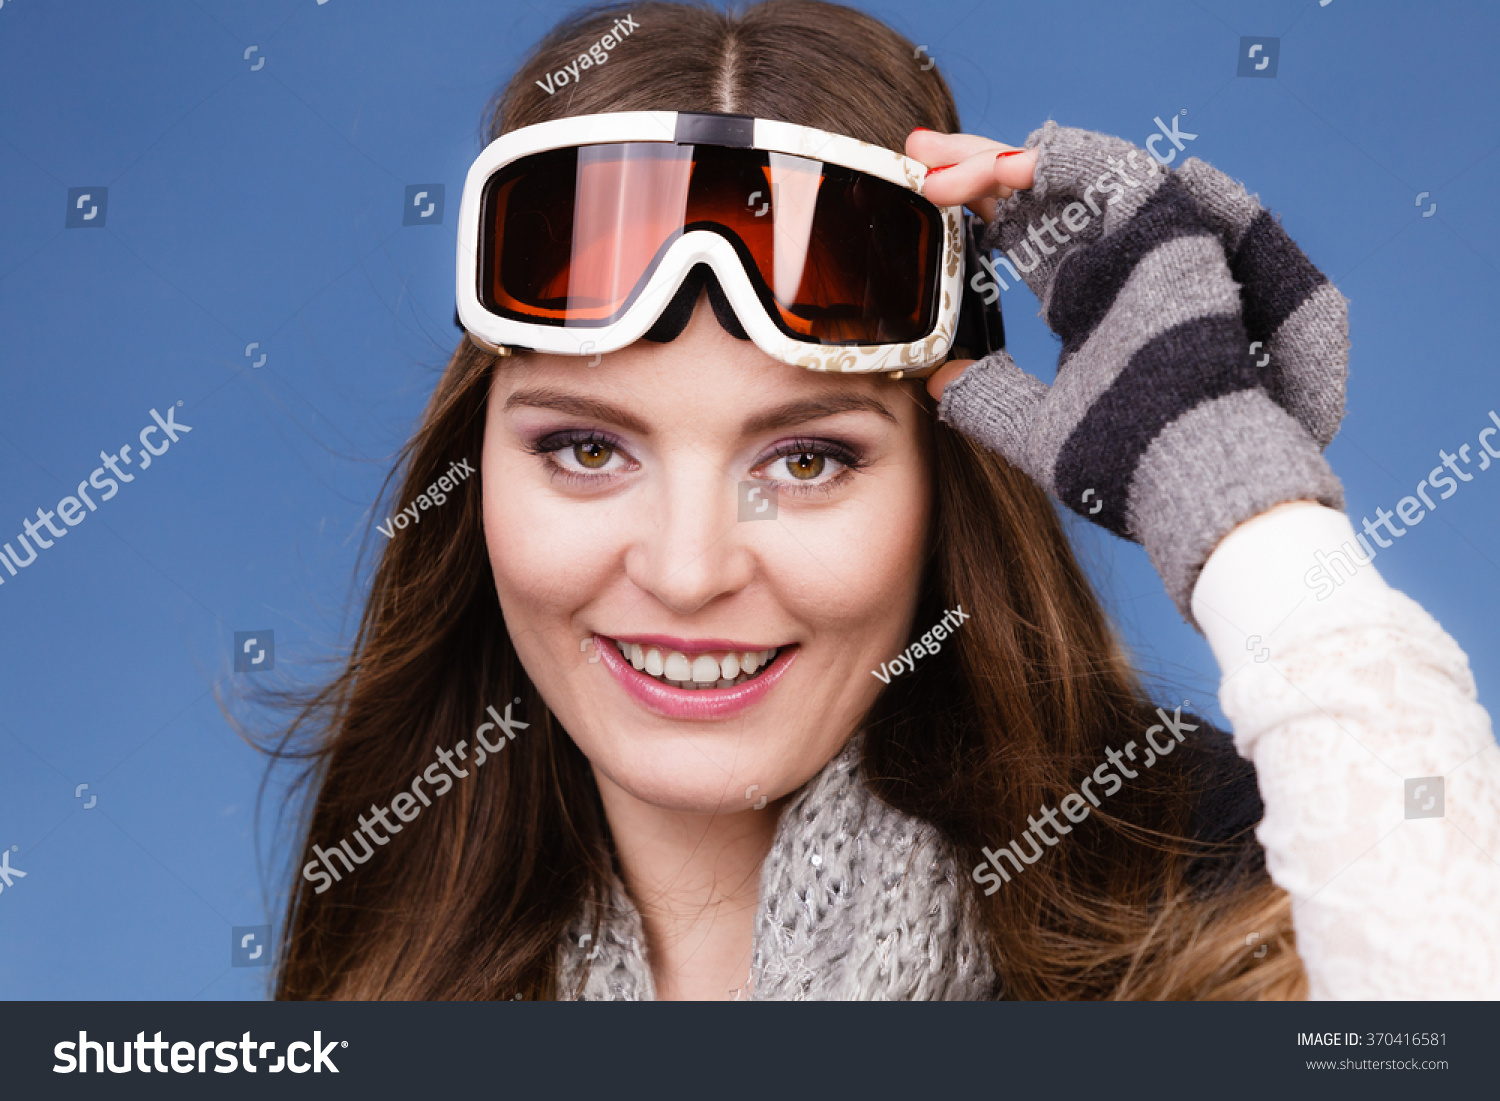 Woman skier girl wearing warm clothing ski goggles portrait. Winter sport activity. Beautiful sportswoman on blue studio shot #370416581